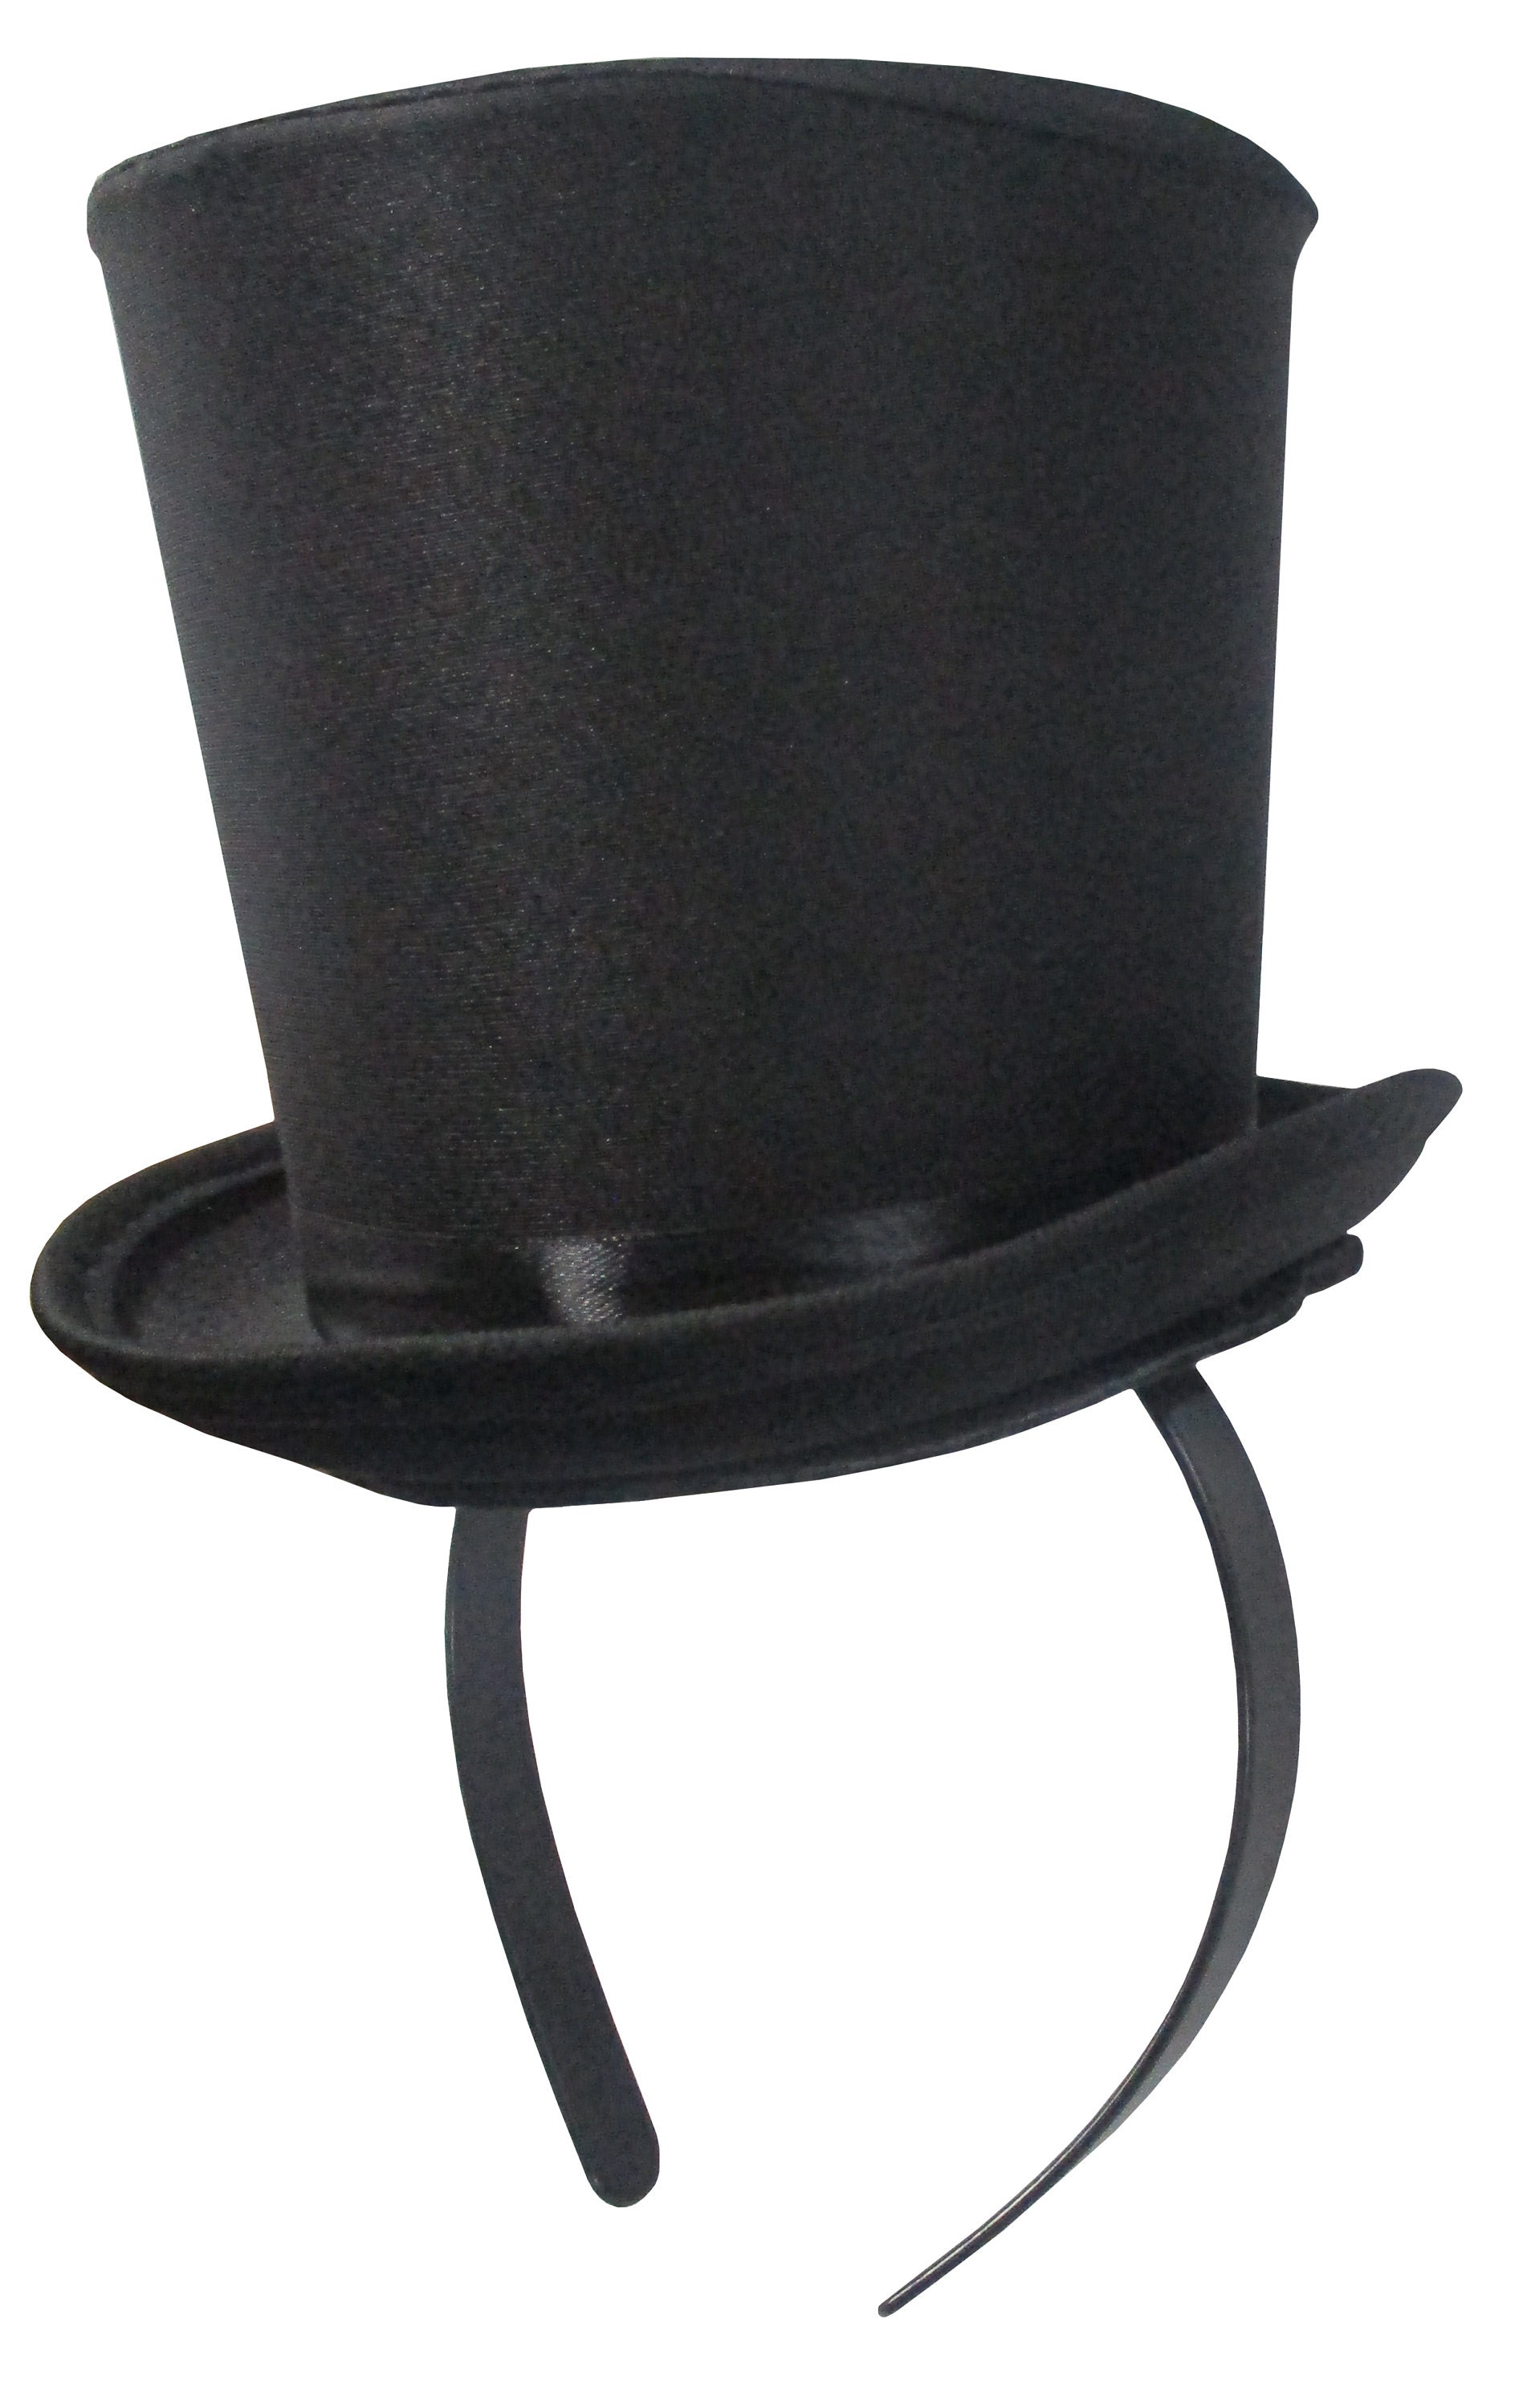 Black butterfly net headdress headband infatuated with top hat church top hat wedding top hat British top hat Mini TOP HAT party top hat